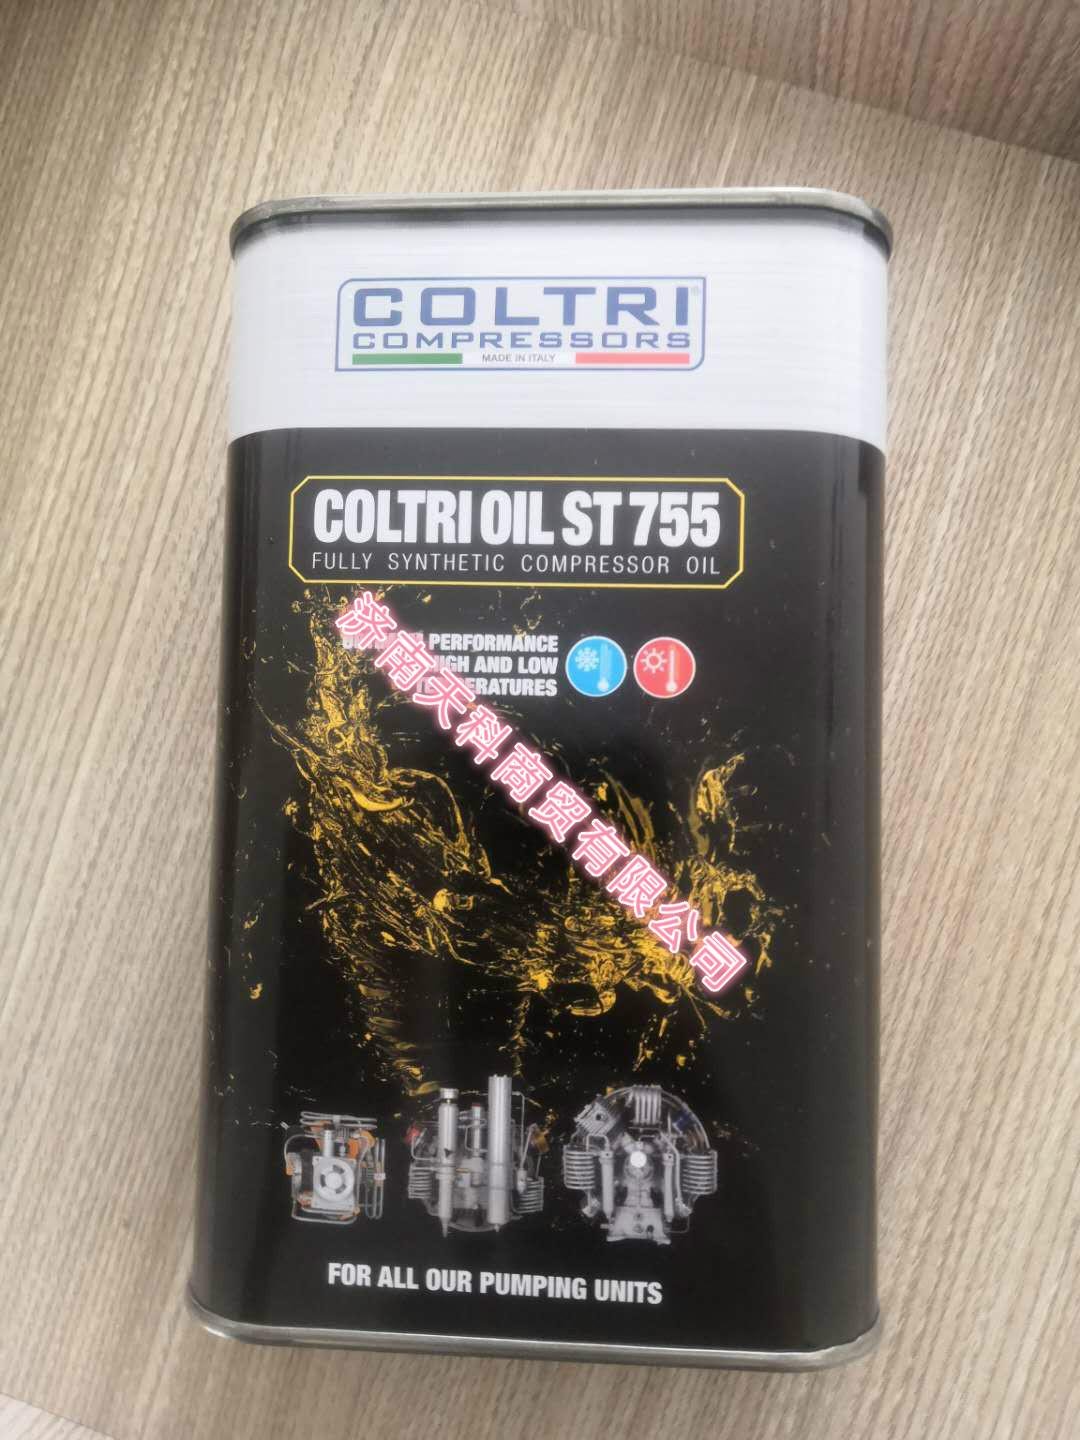 科爾奇COLTRI ST755合成潤滑油原科爾奇CE750 3